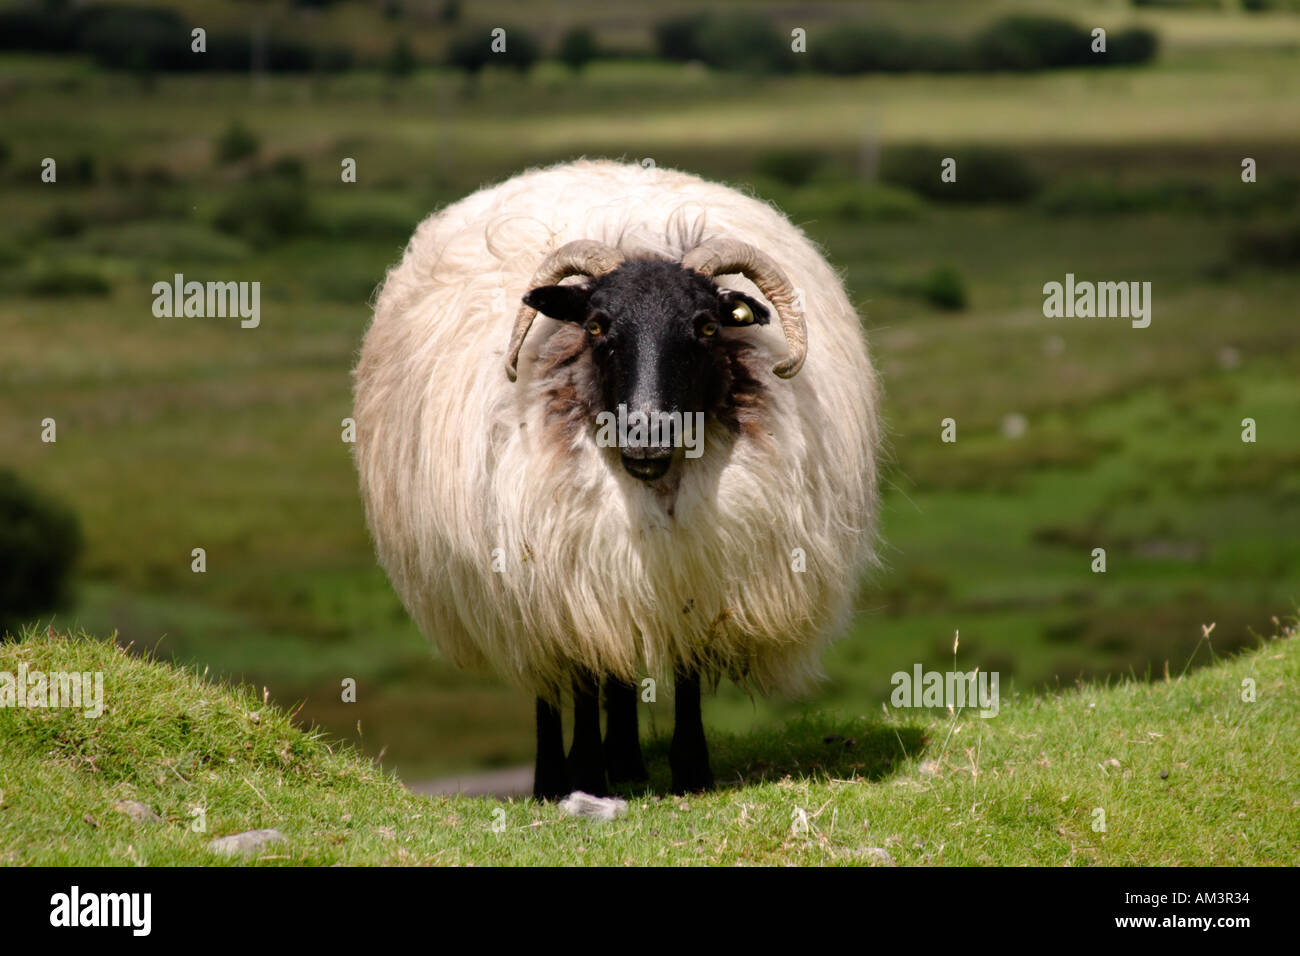 Ram male sheep in Ireland Stock Photo - Alamy